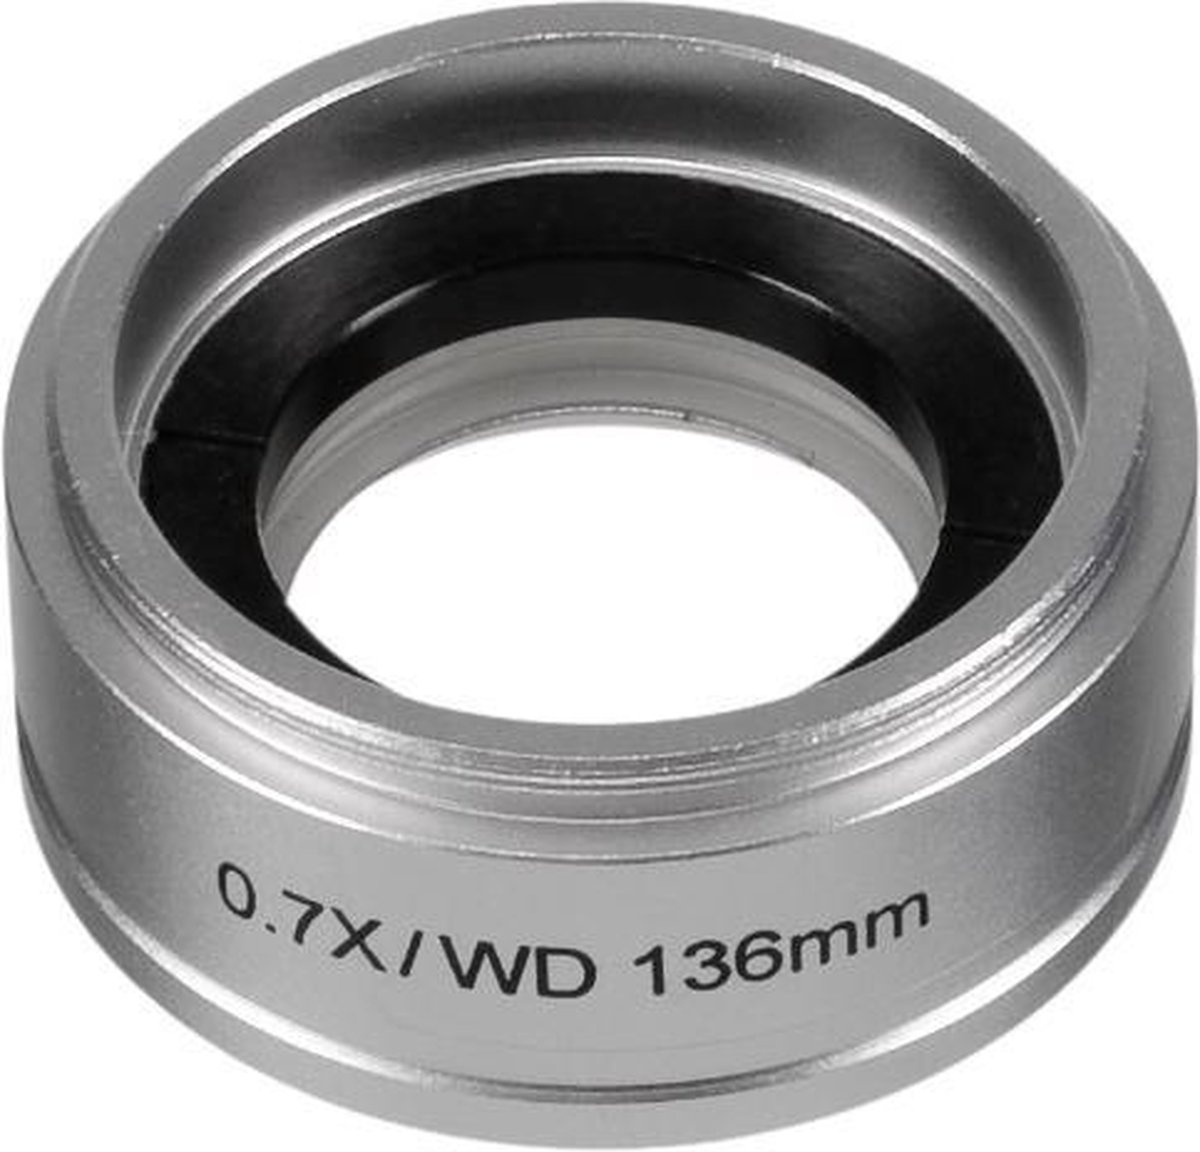 Bresser Microscoop Lens Etd-201 0,7x Aluminium Zilver